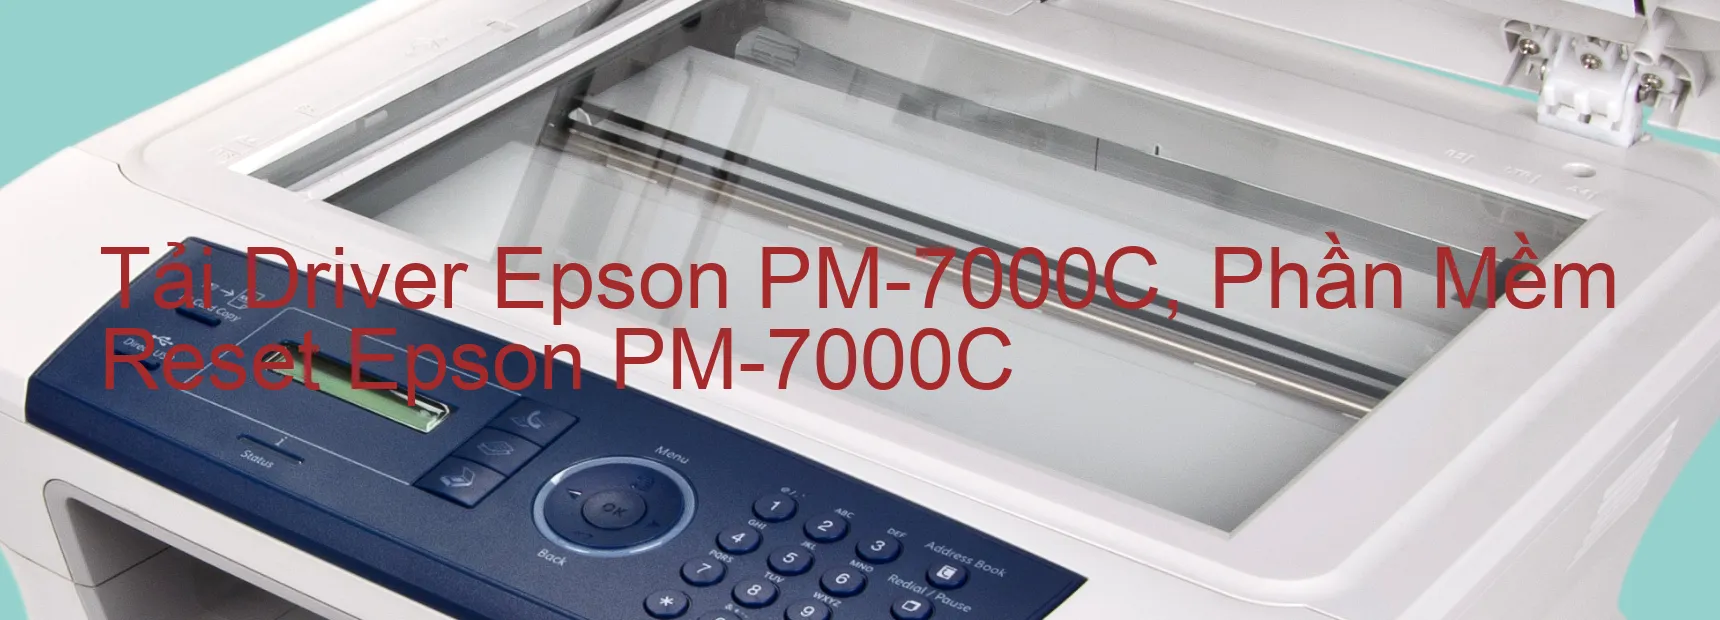 Driver Epson PM-7000C, Phần Mềm Reset Epson PM-7000C